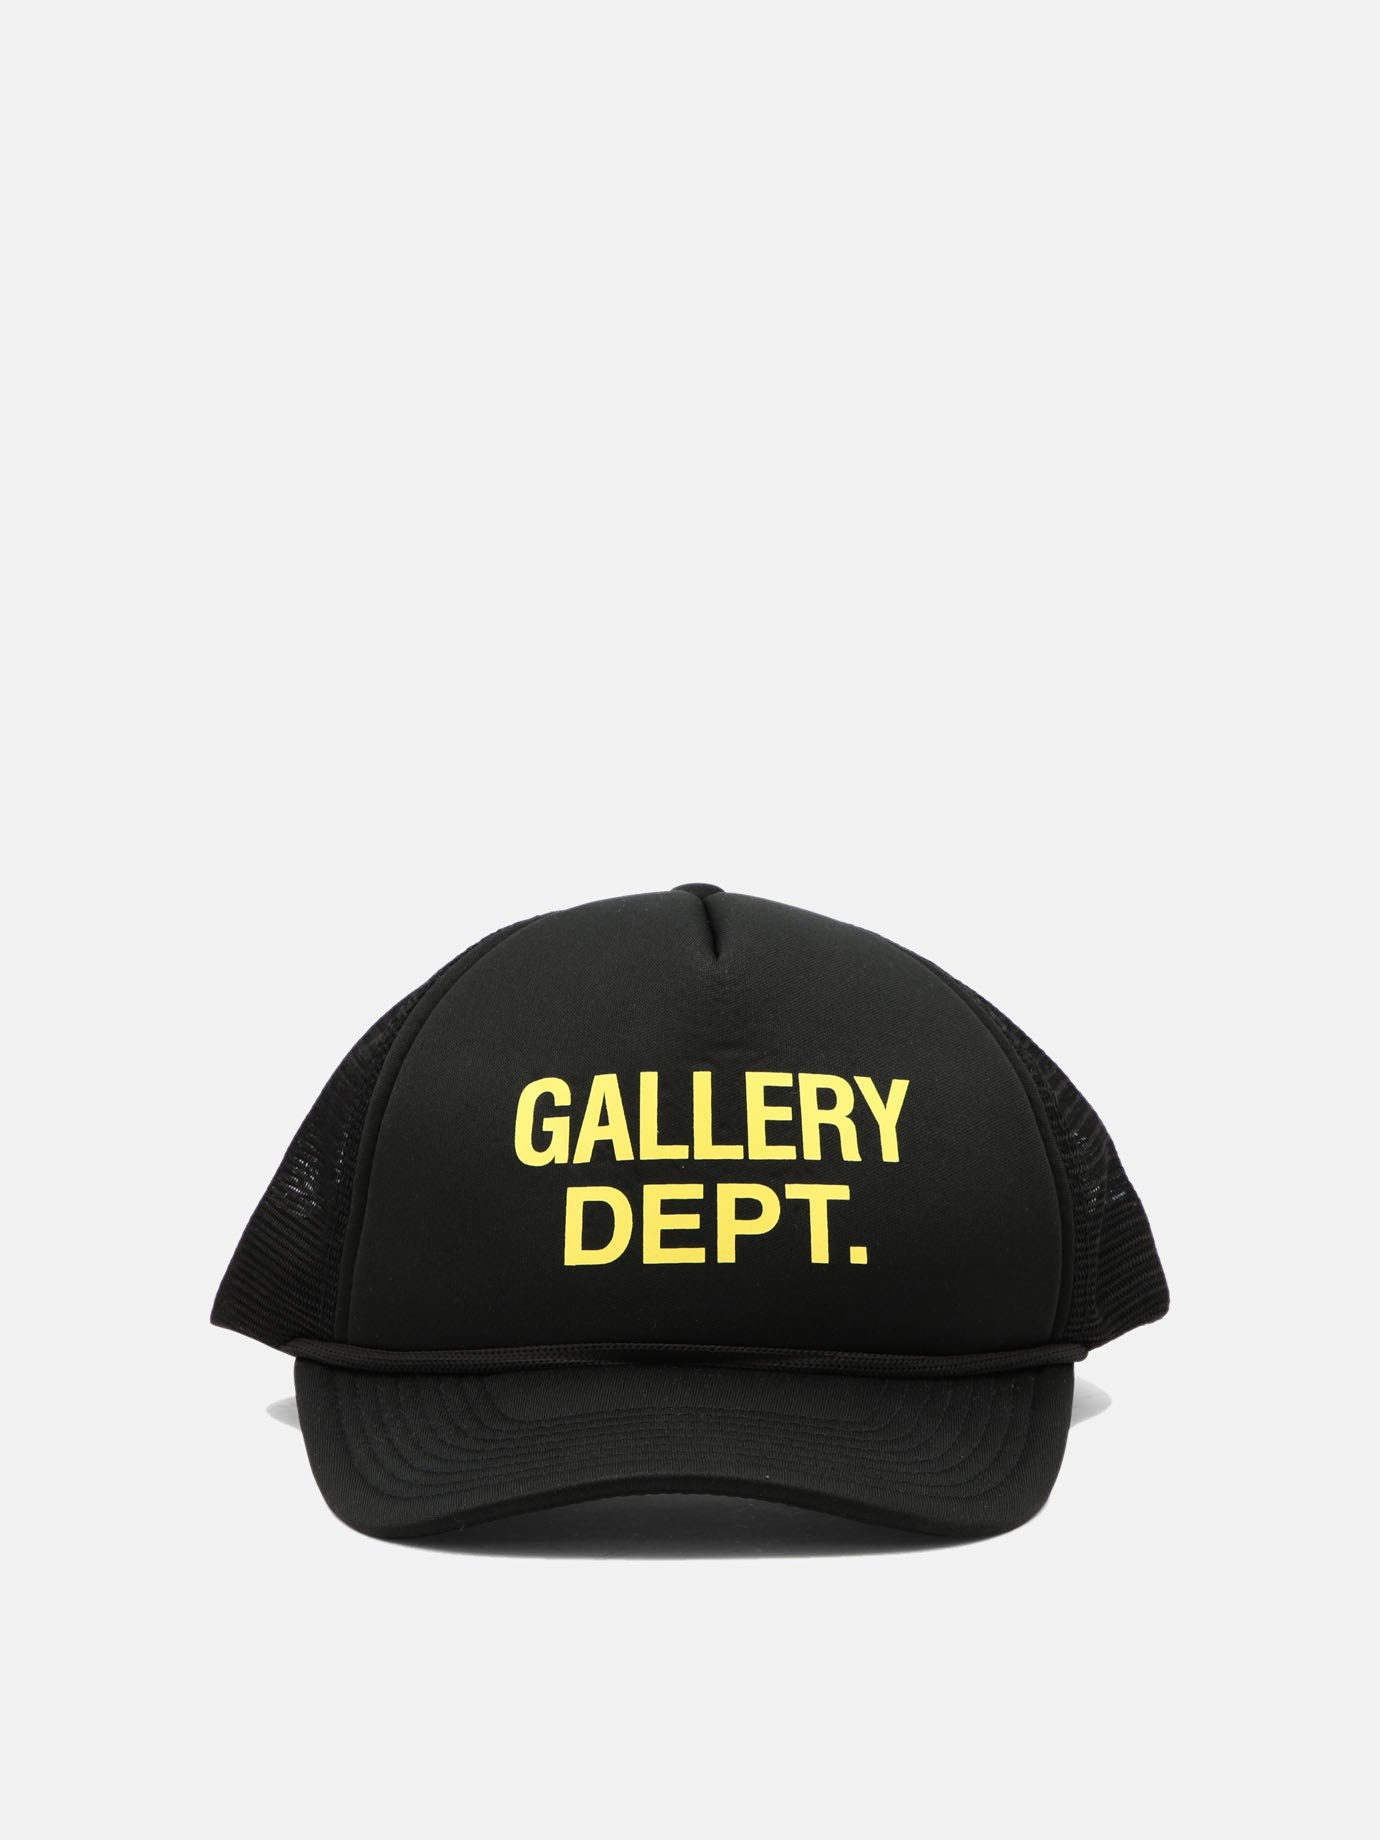  Workshop  cap by Gallery Dept.